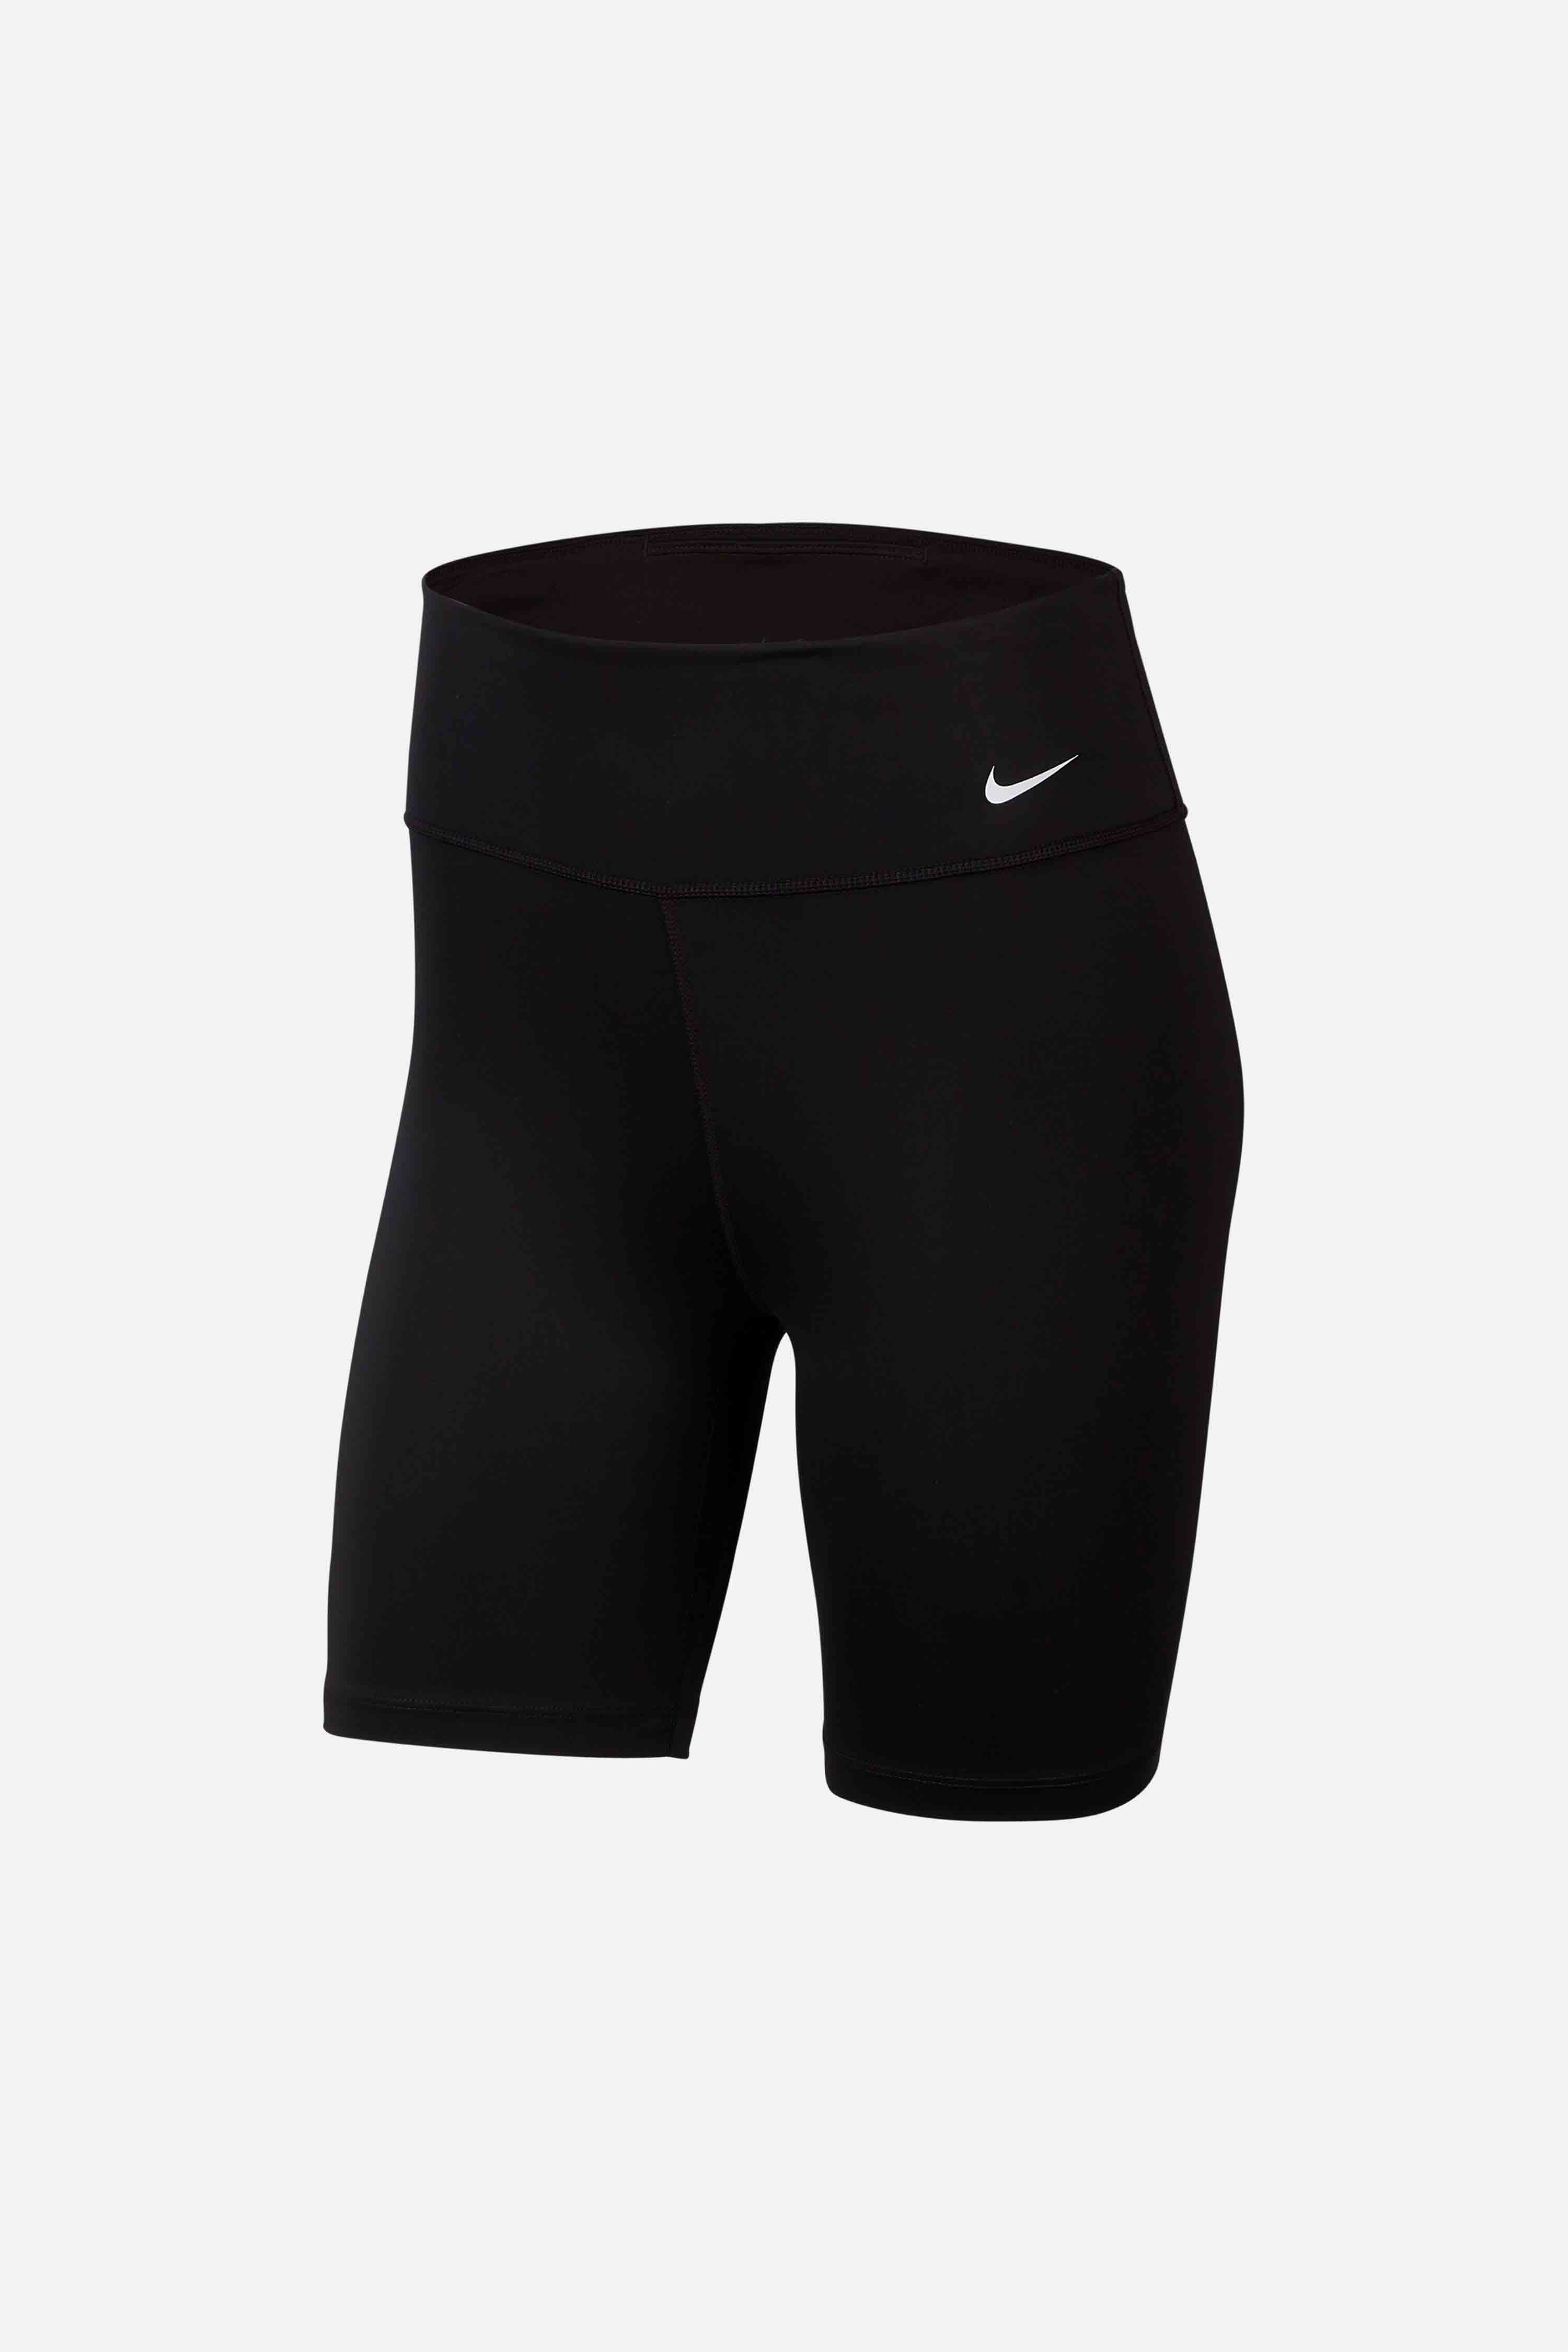 black nike cycle shorts